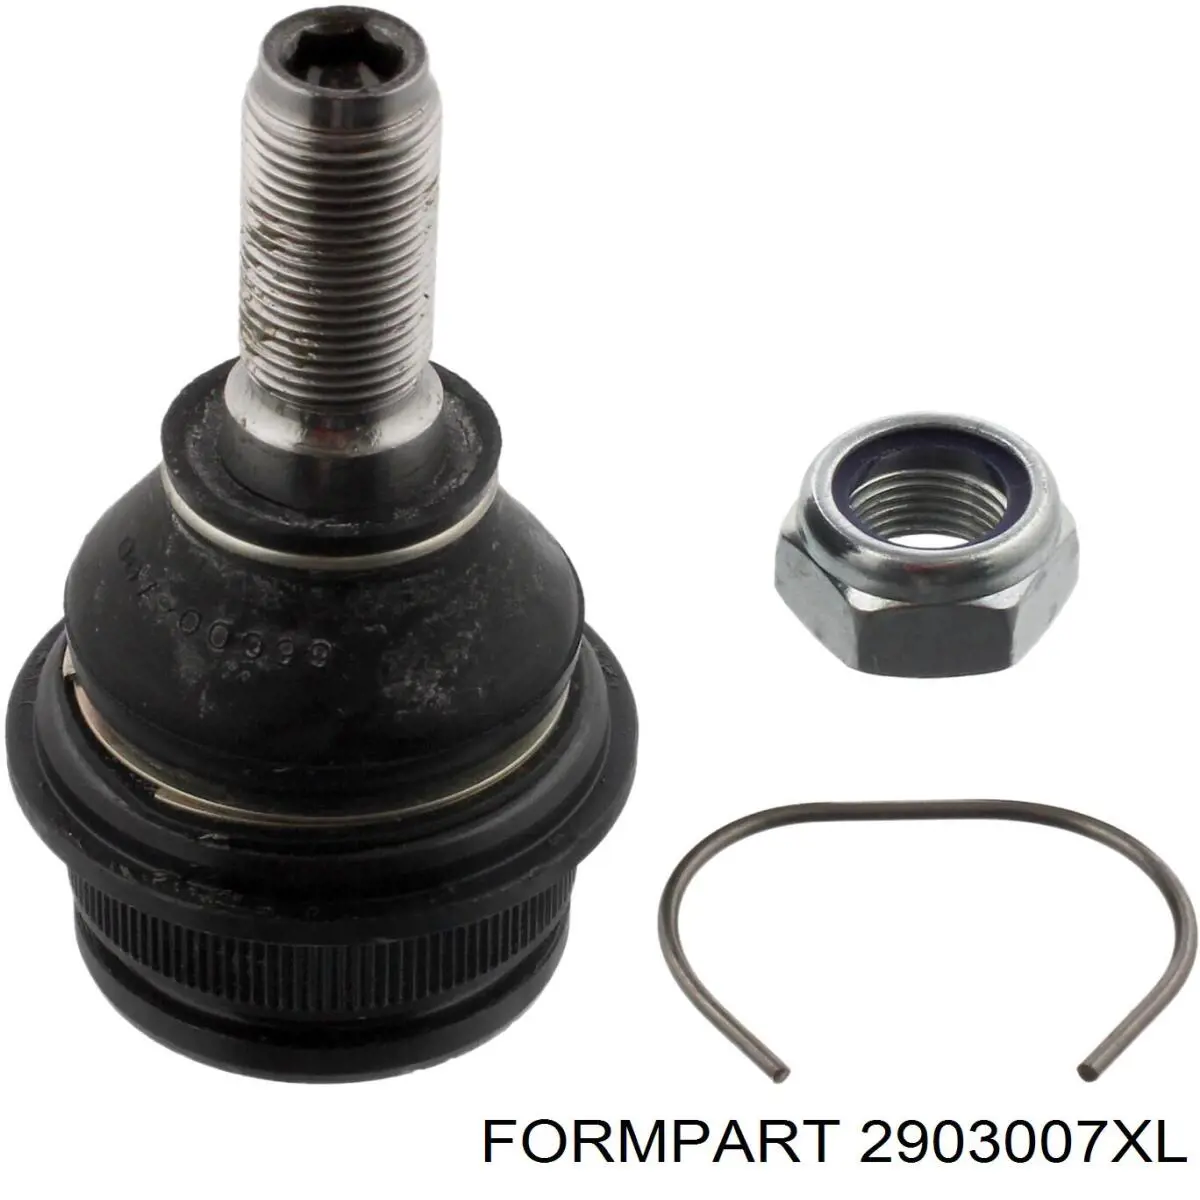 2903007-XL Formpart/Otoform suporte de esfera superior